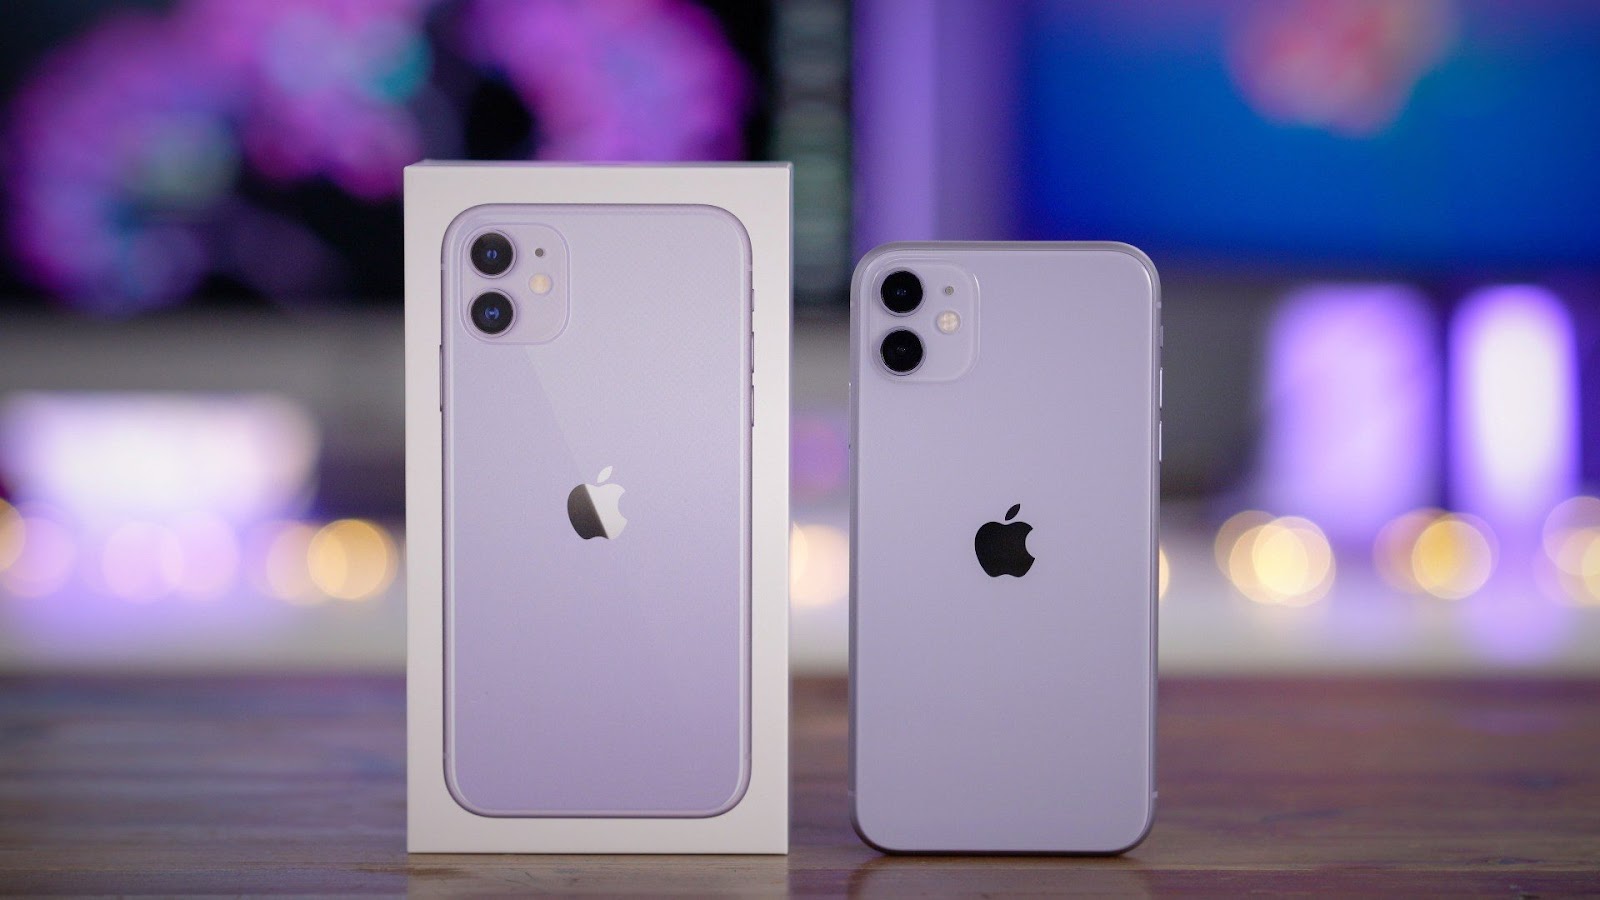 iphone-11-purple-9to5mac